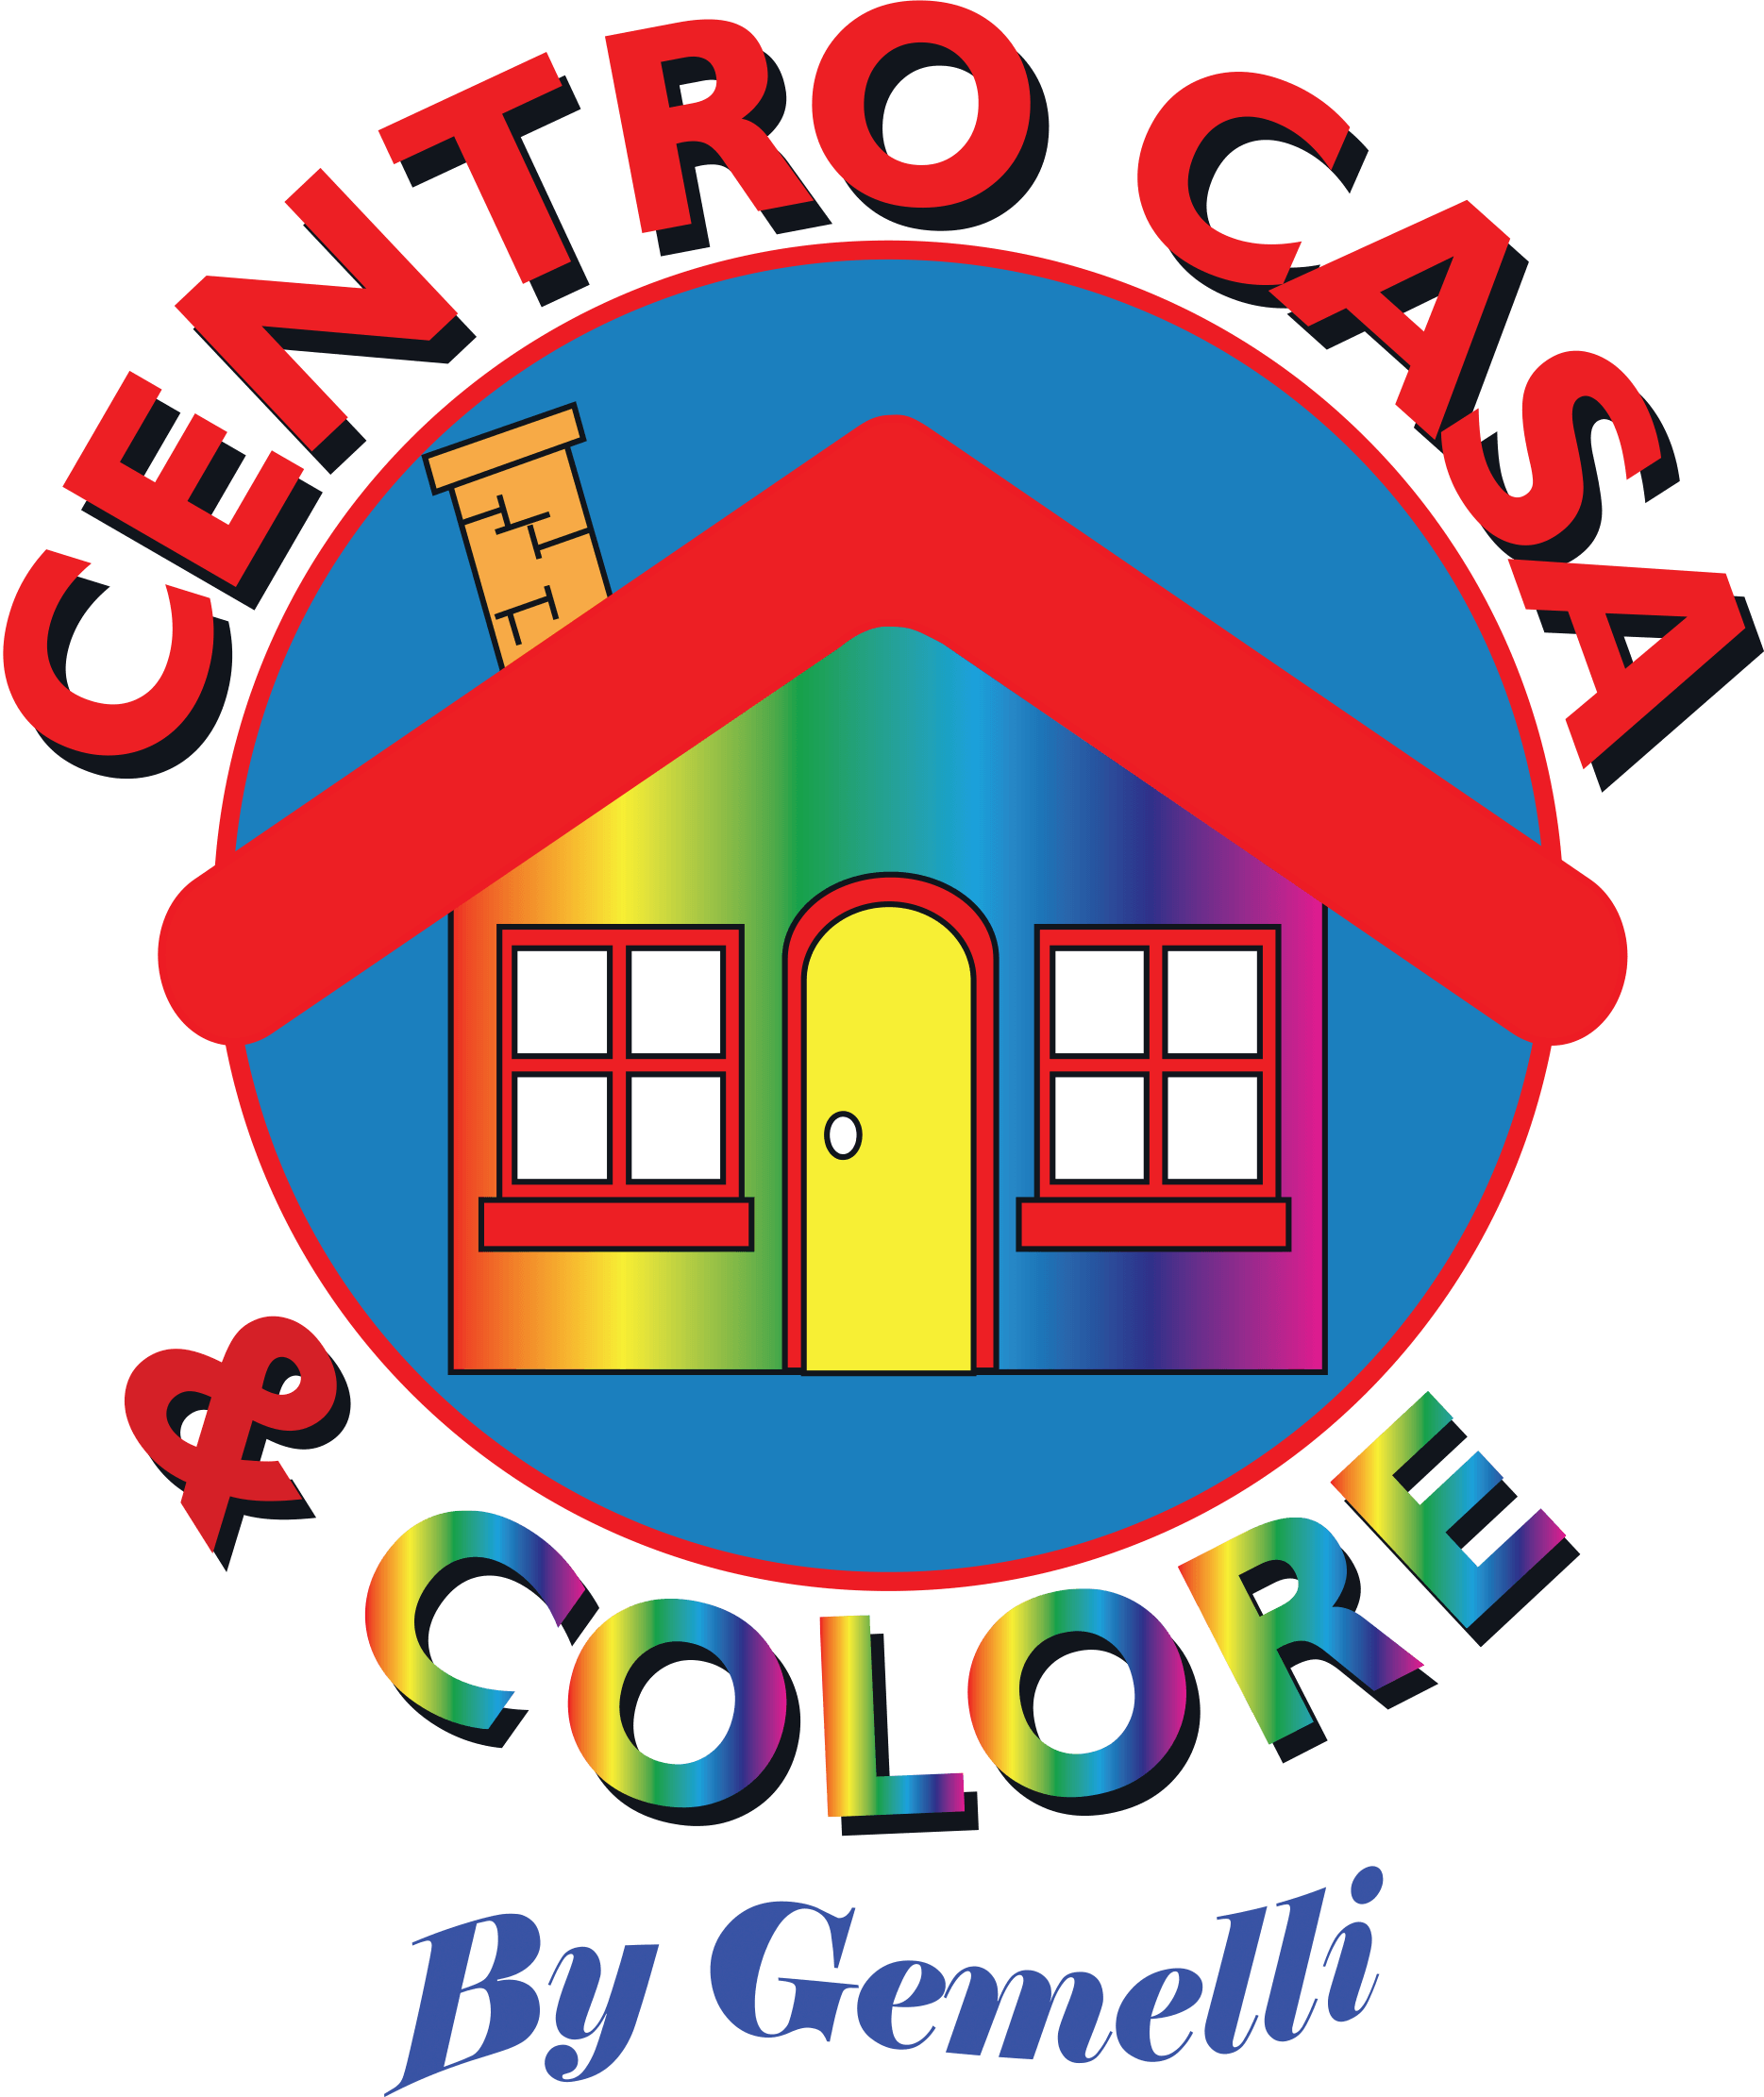 Centro Casa e Colore Logo